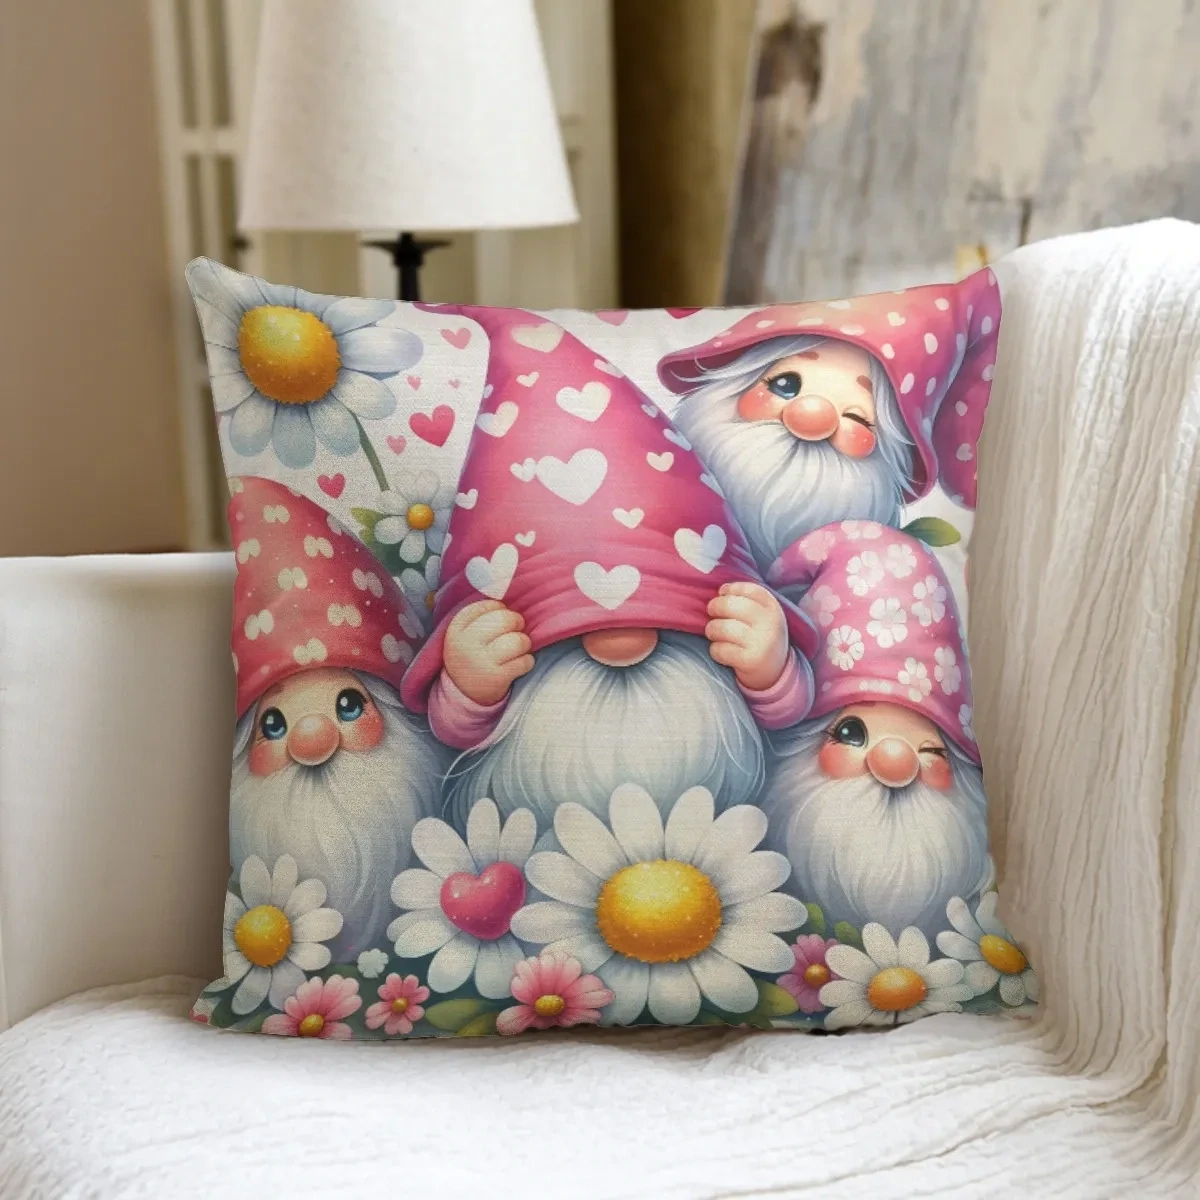 Funny spring gnome pillow